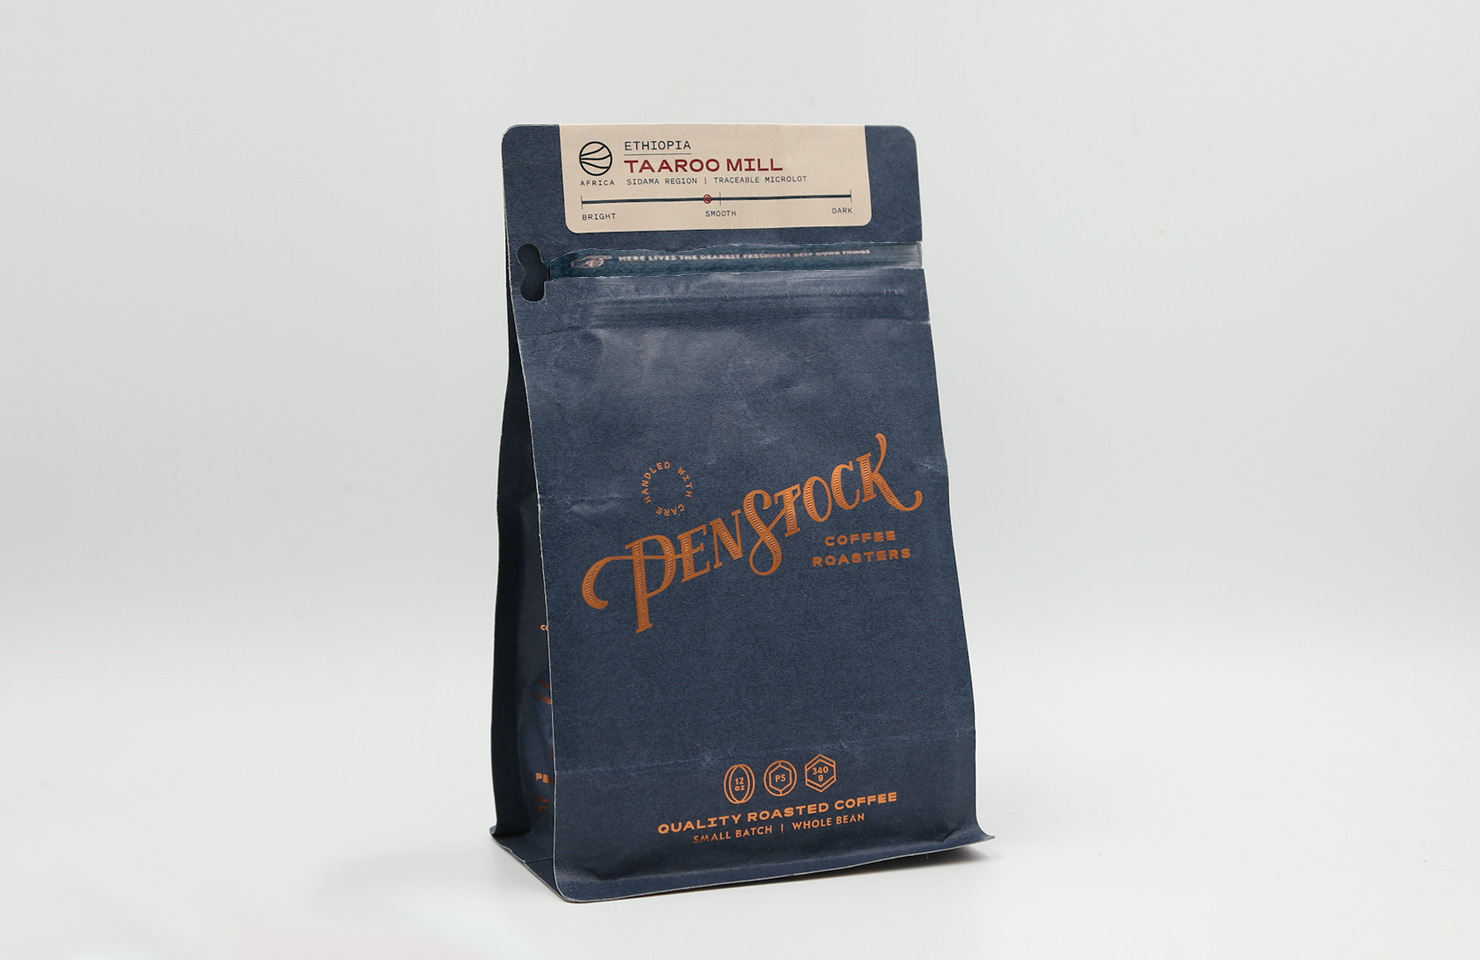 Penstock Coffee